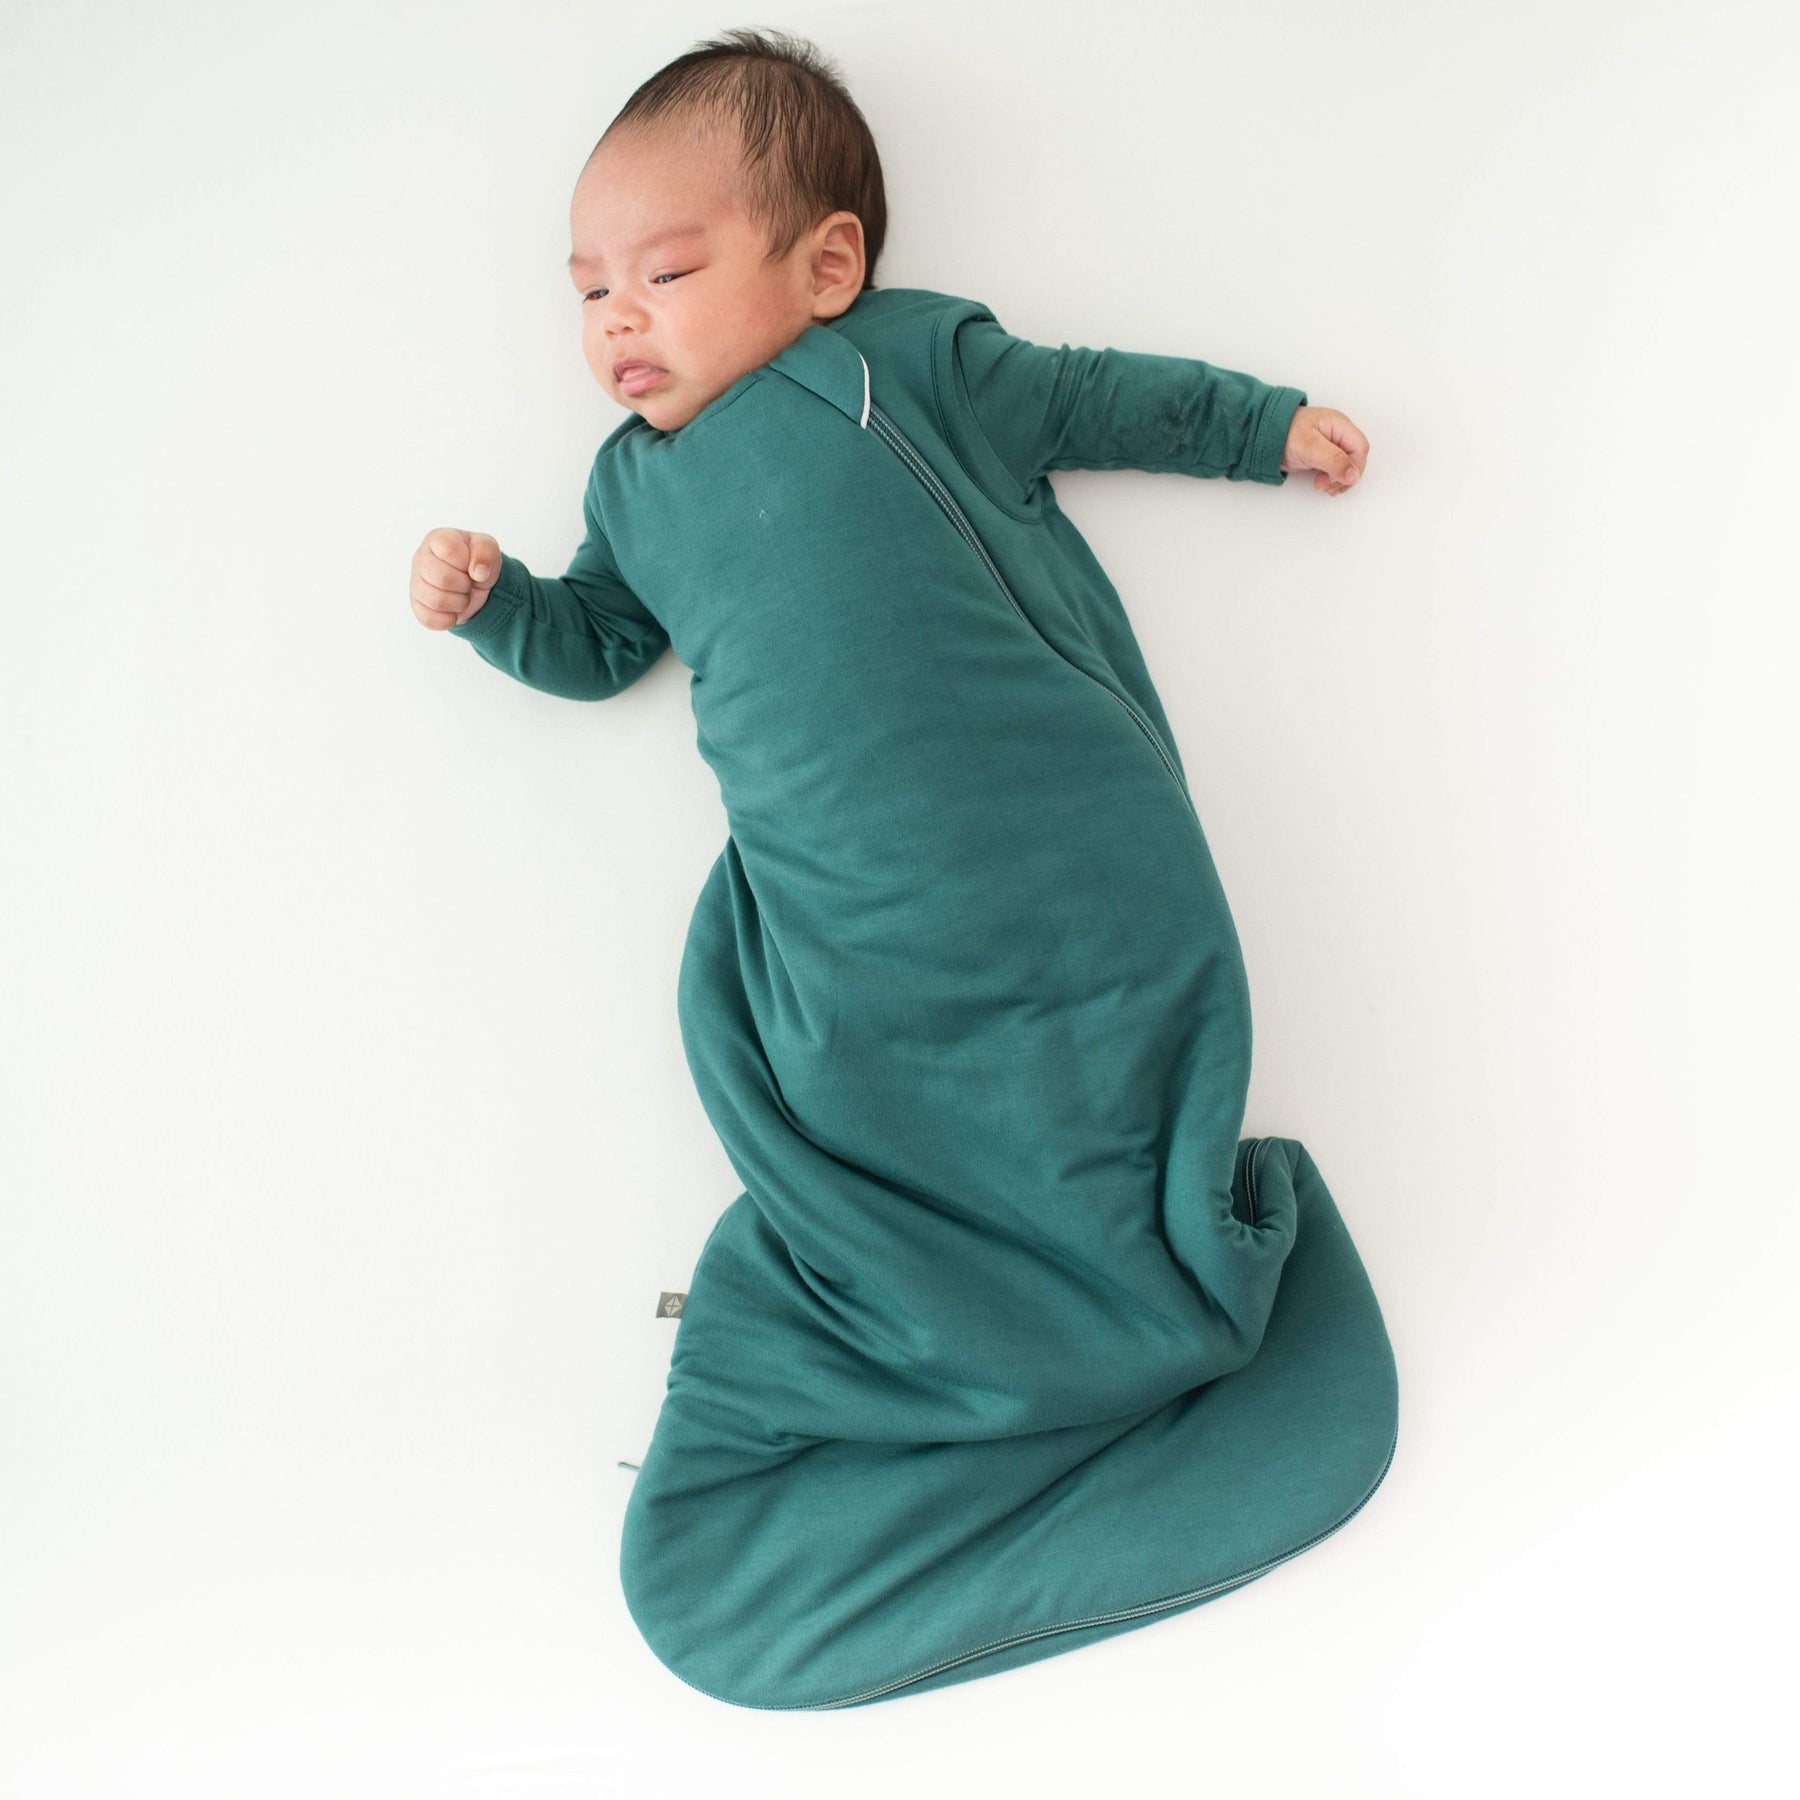 Baby wearing Kyte Baby bamboo Sleep Bag TOG 2.5 in Emerald green